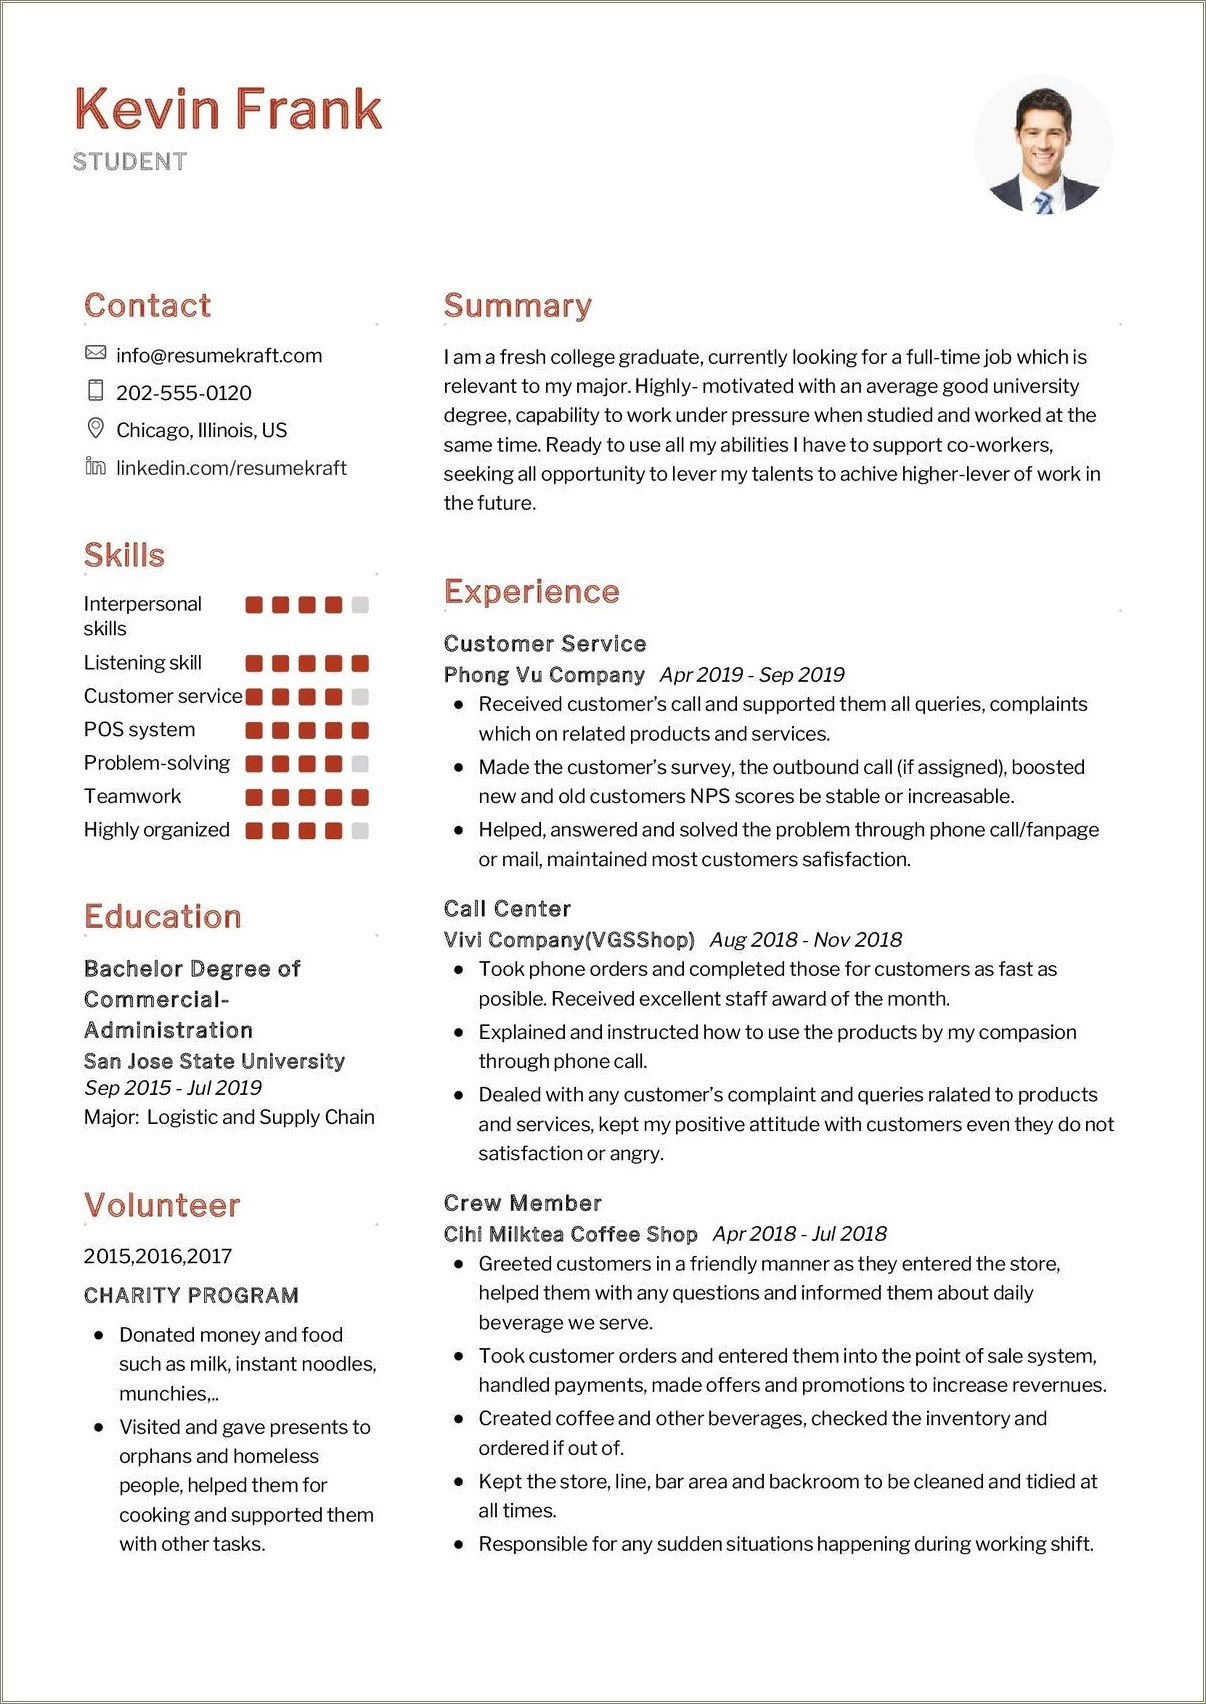 Fundraising Call Center Description For Resume